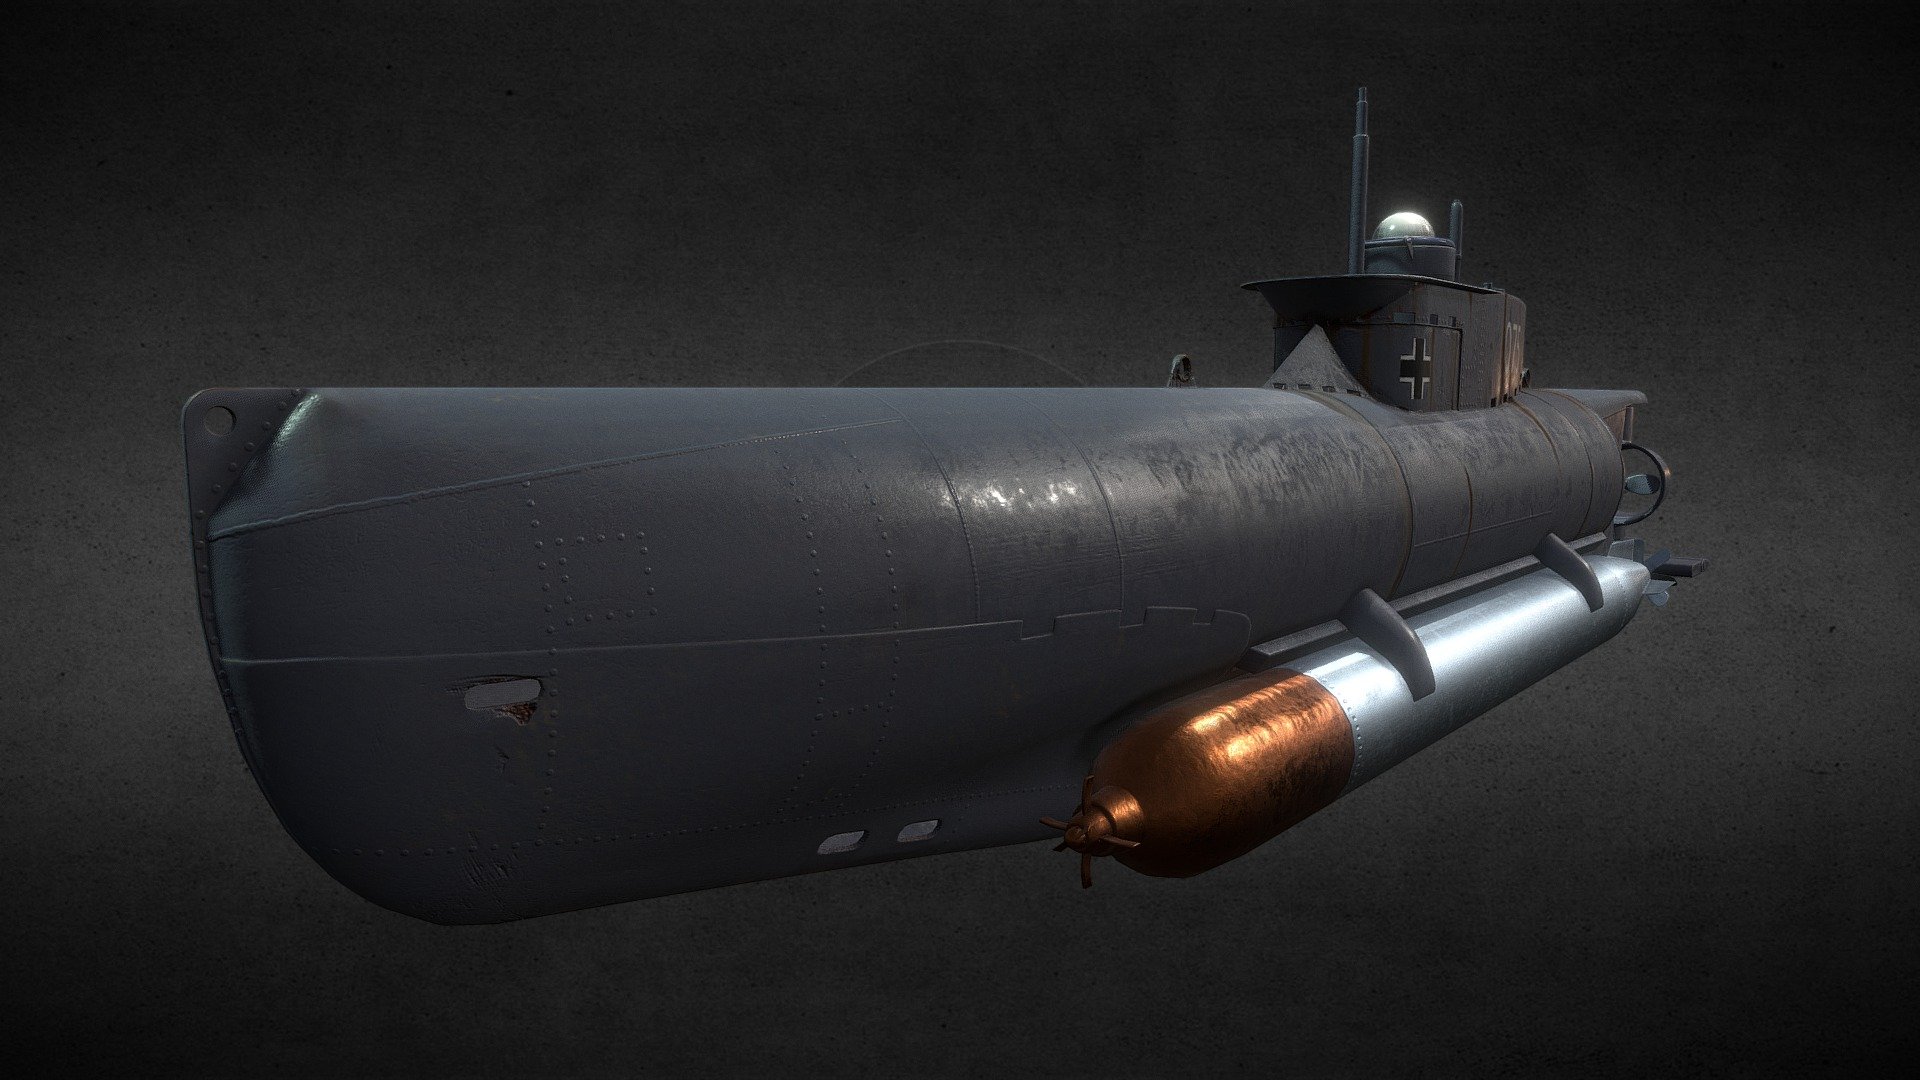 Seehund U-boat